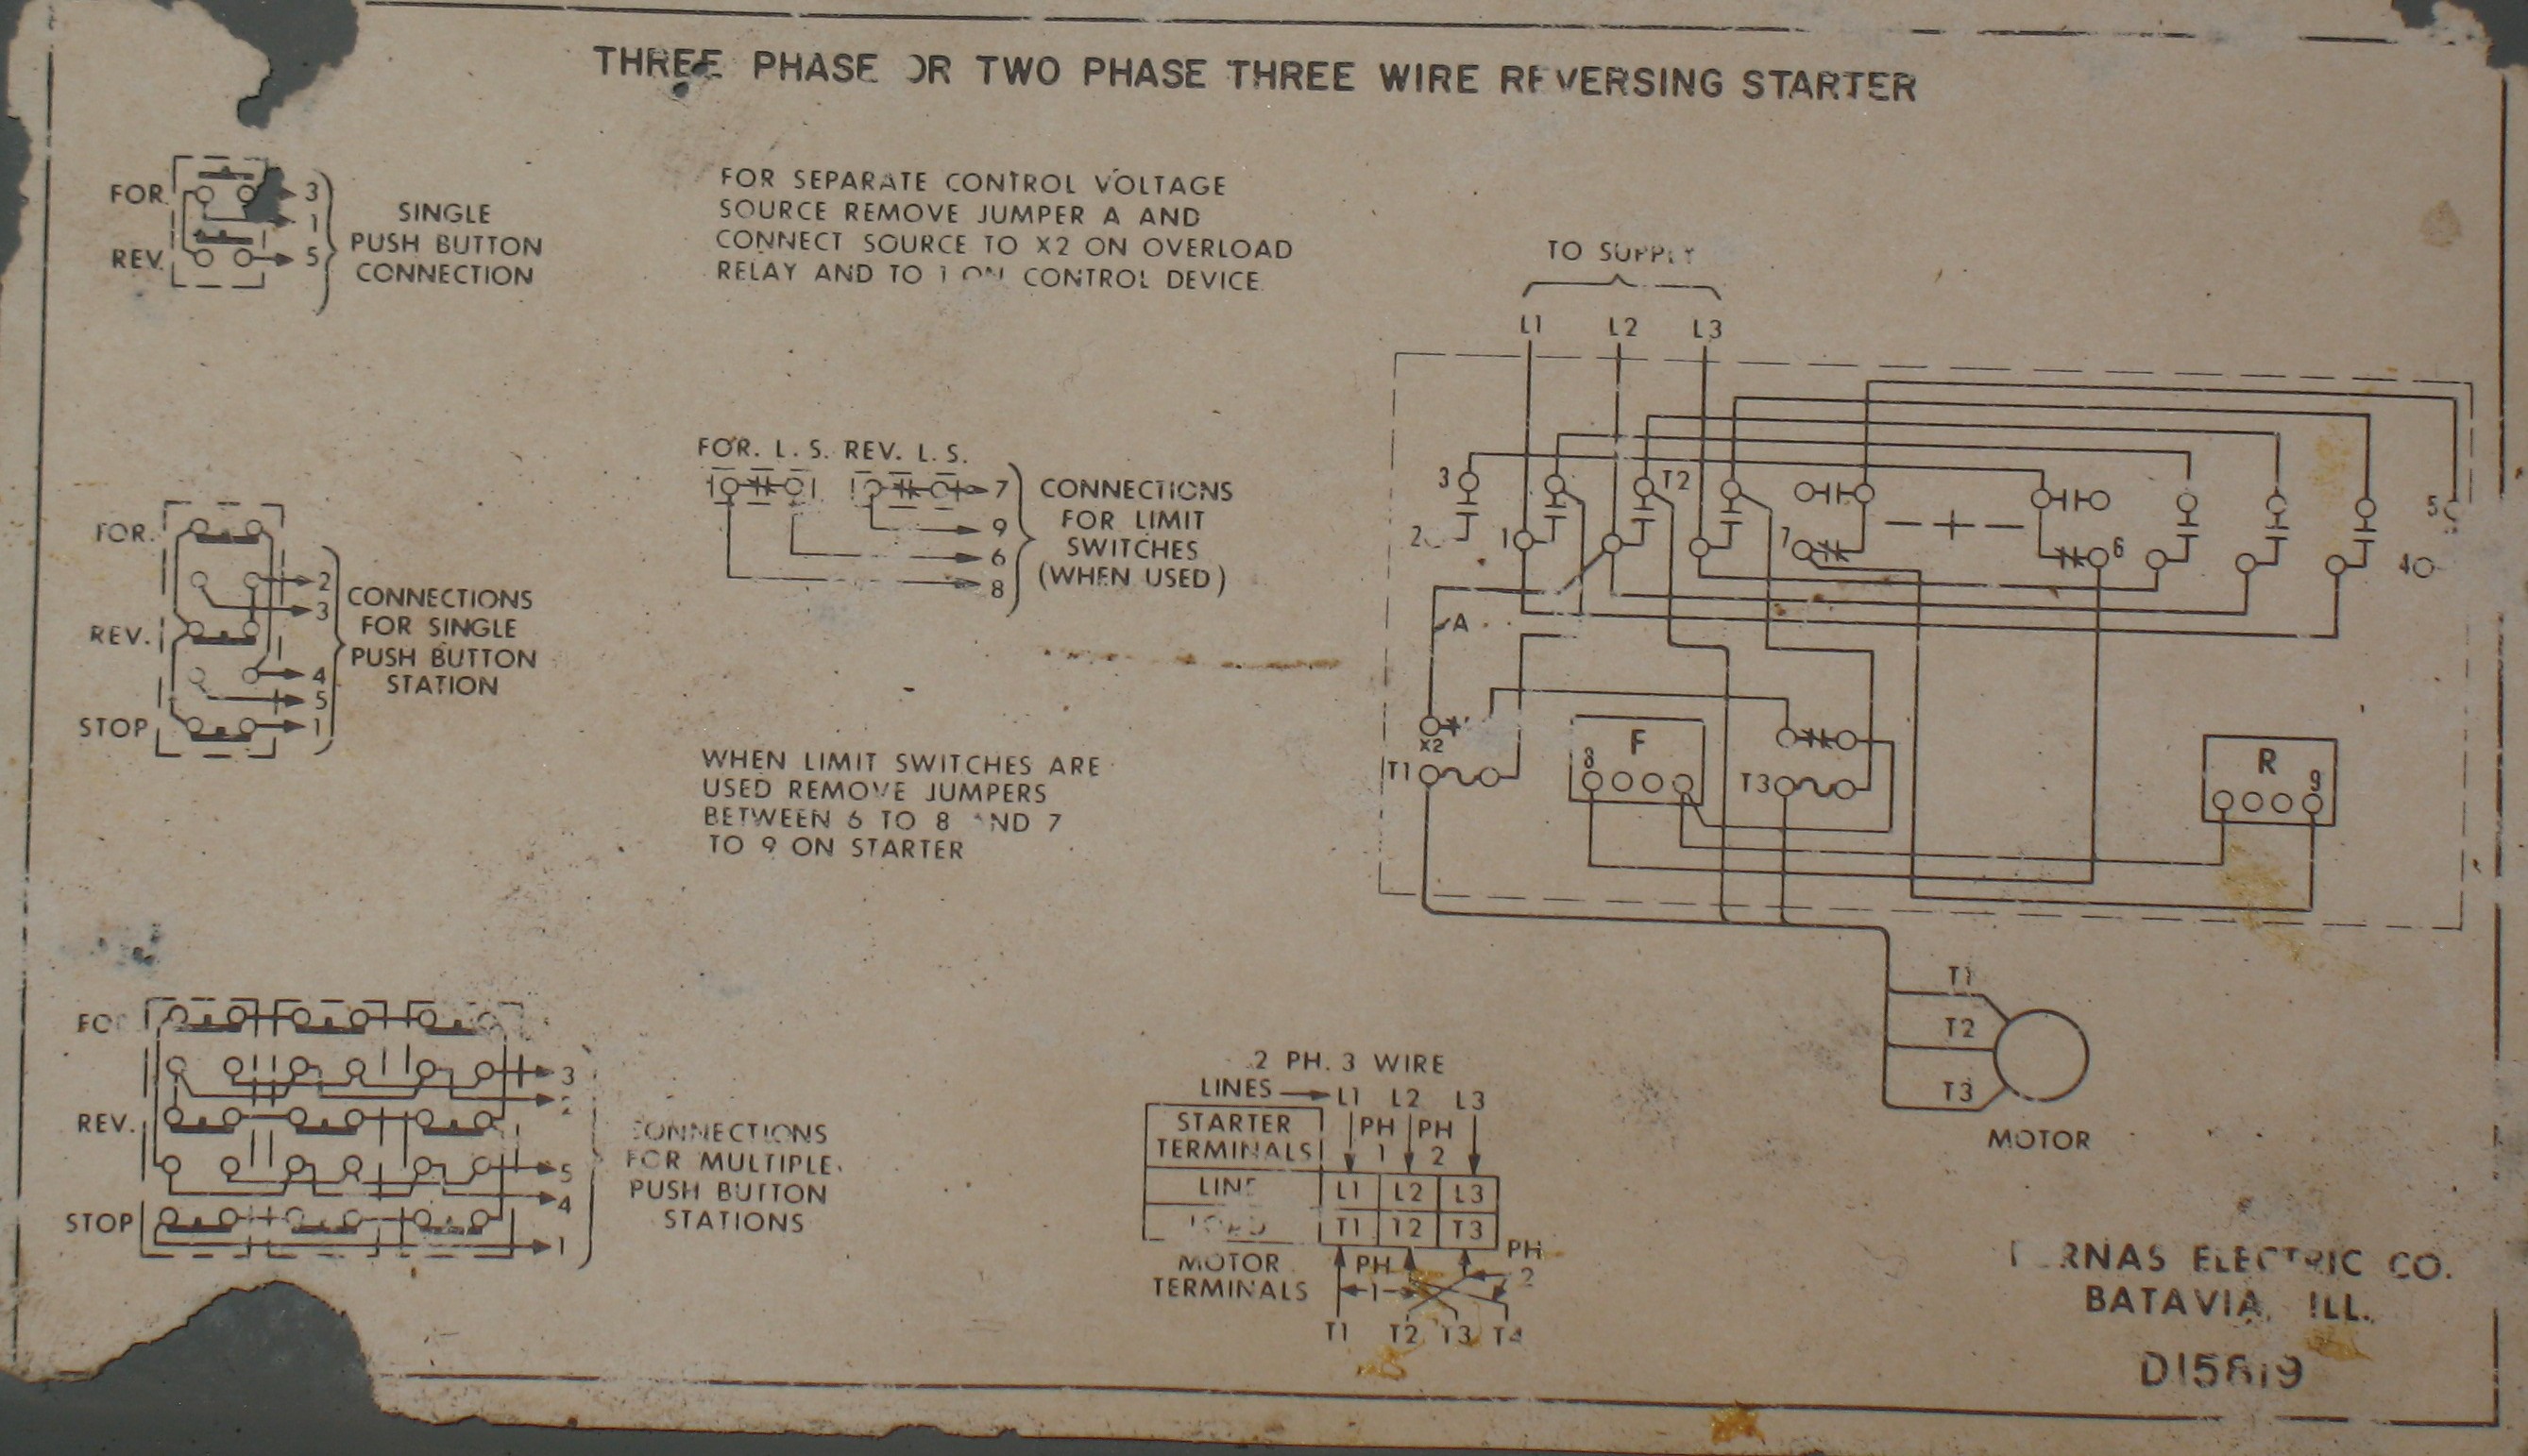 doerr lr22132 wiring diagram